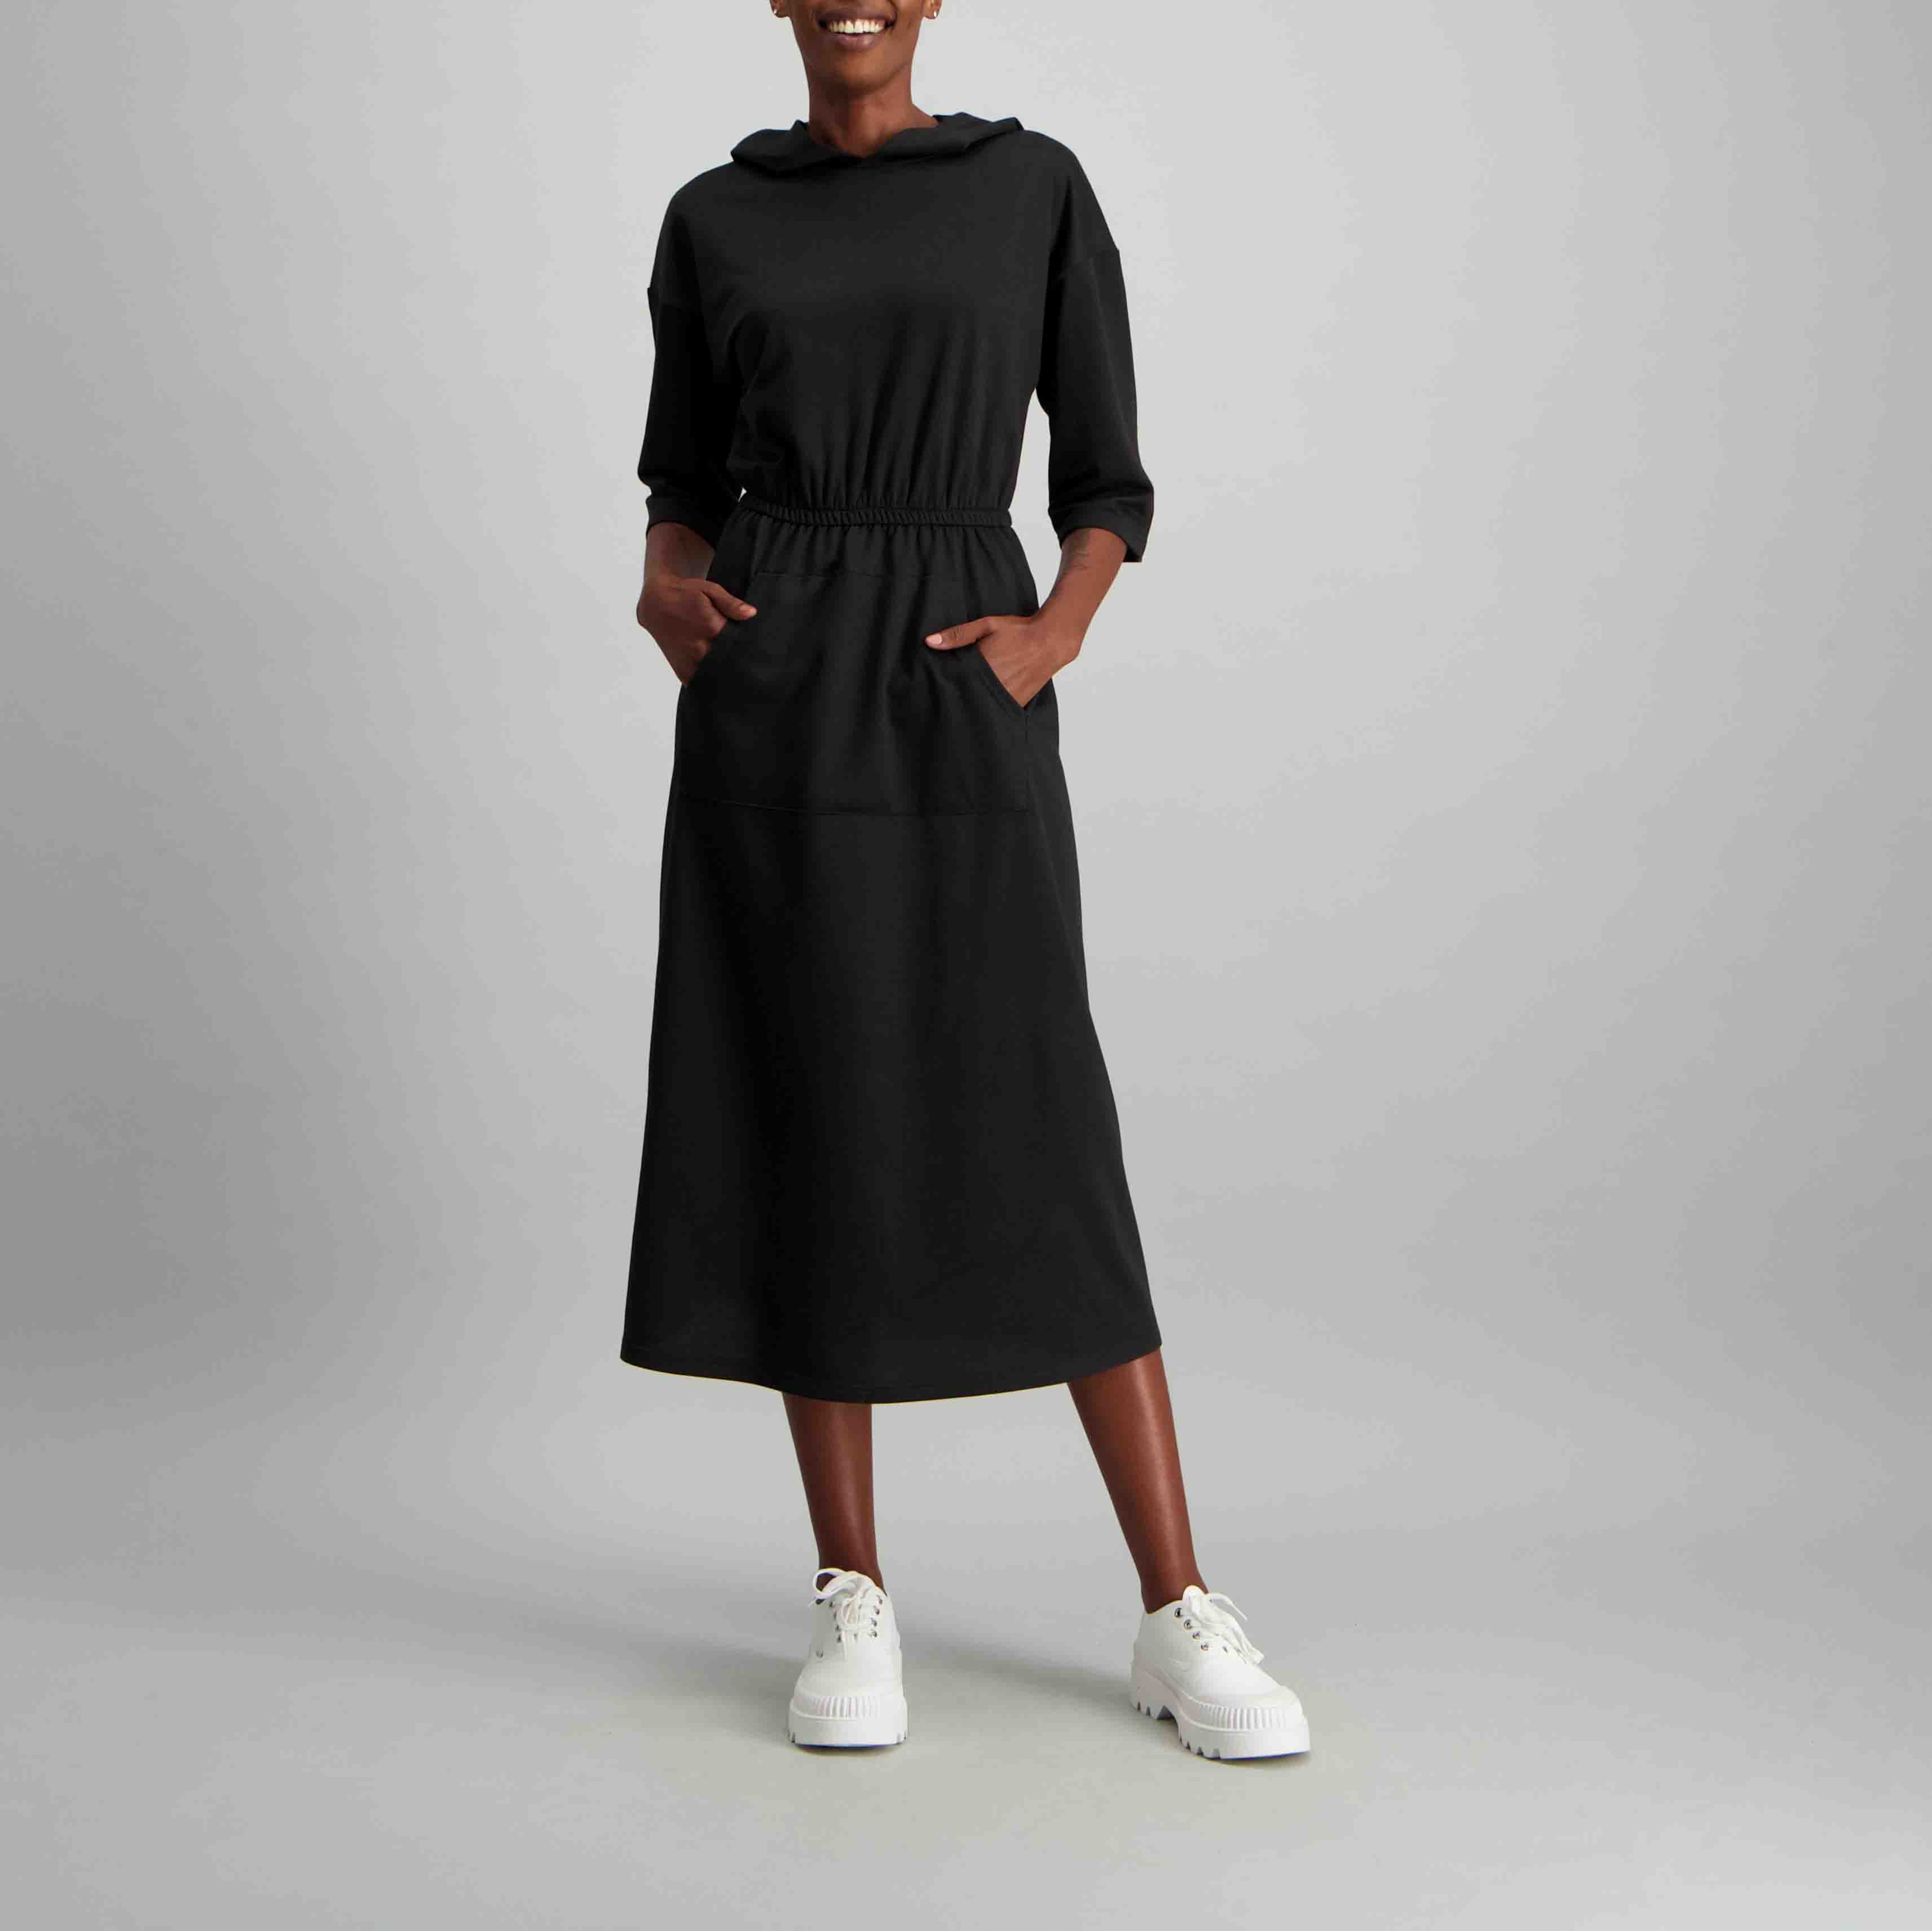 3/4 Hooded Dress - Fashion Fusion 189.99 Fashion Fusion